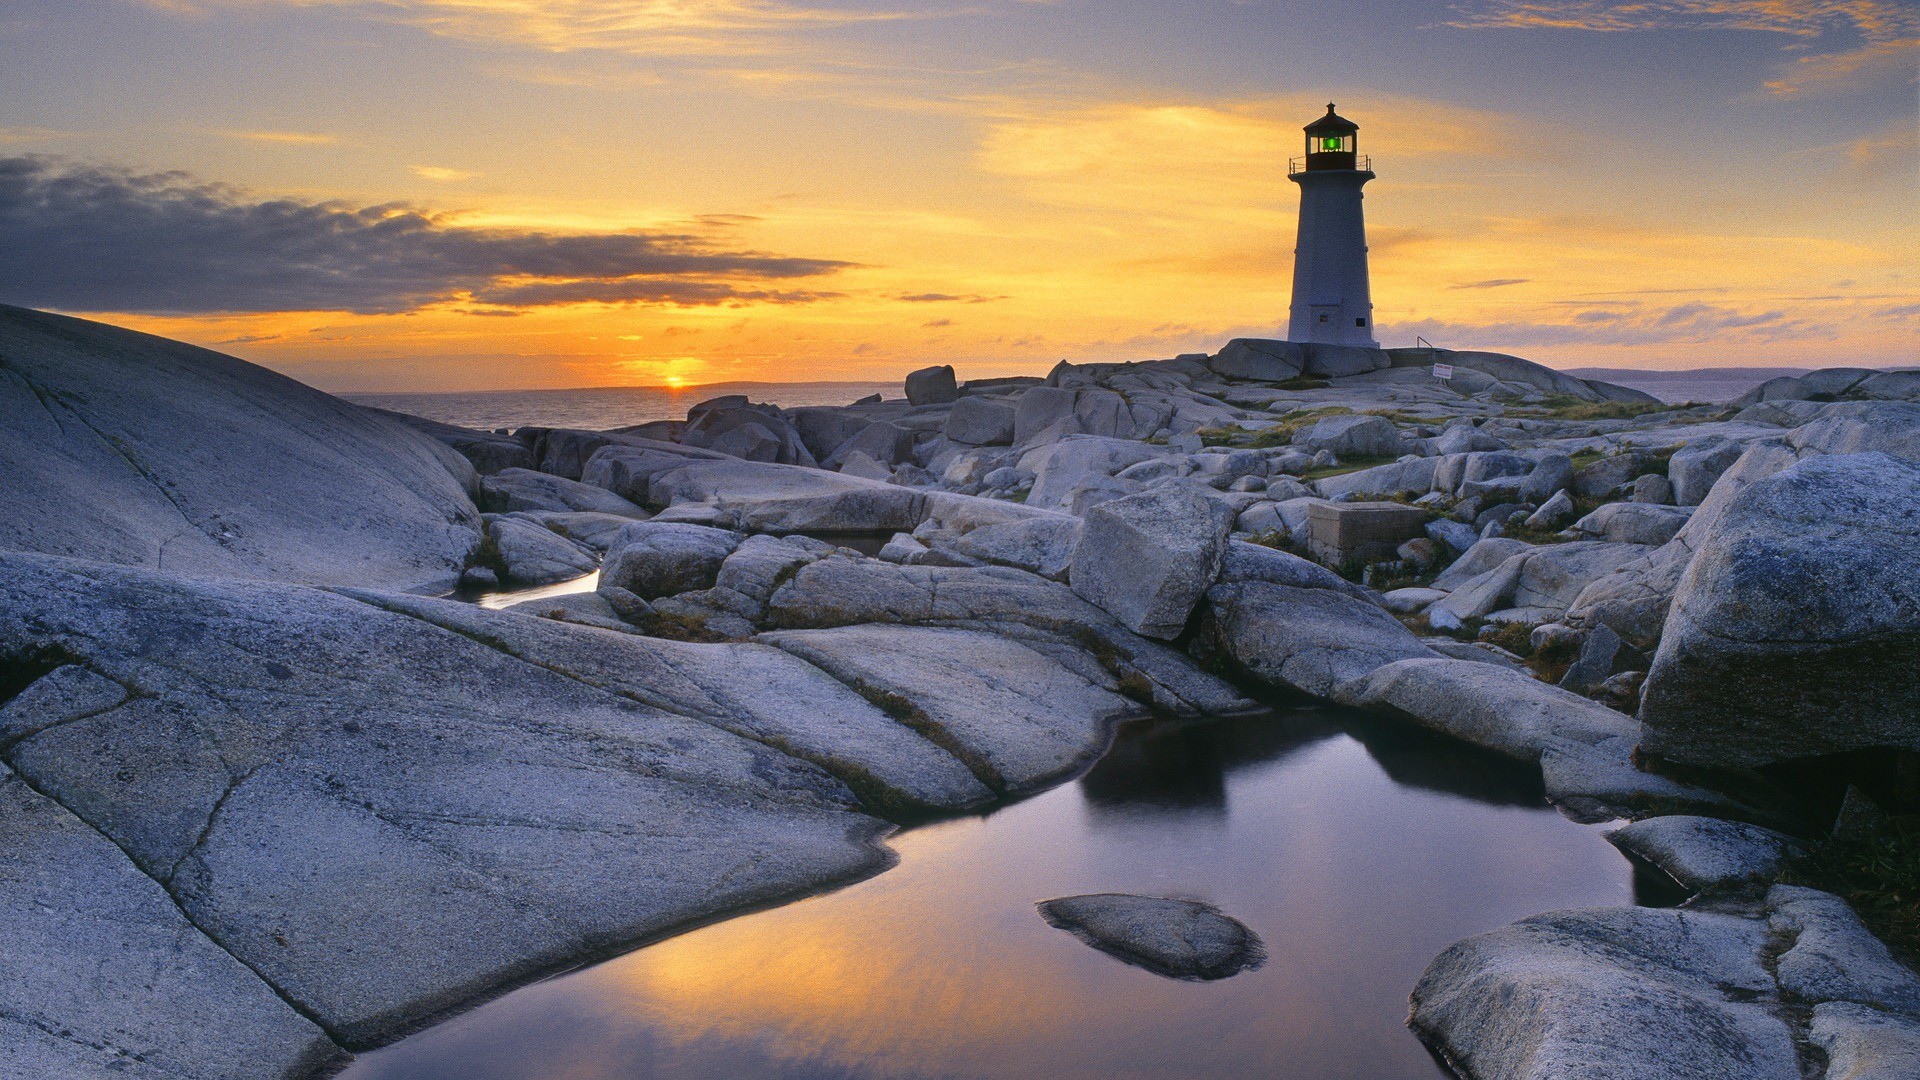 Peggys Cove Lighthouse at Dusk, Nova Scotia, Canada – Professional Photos